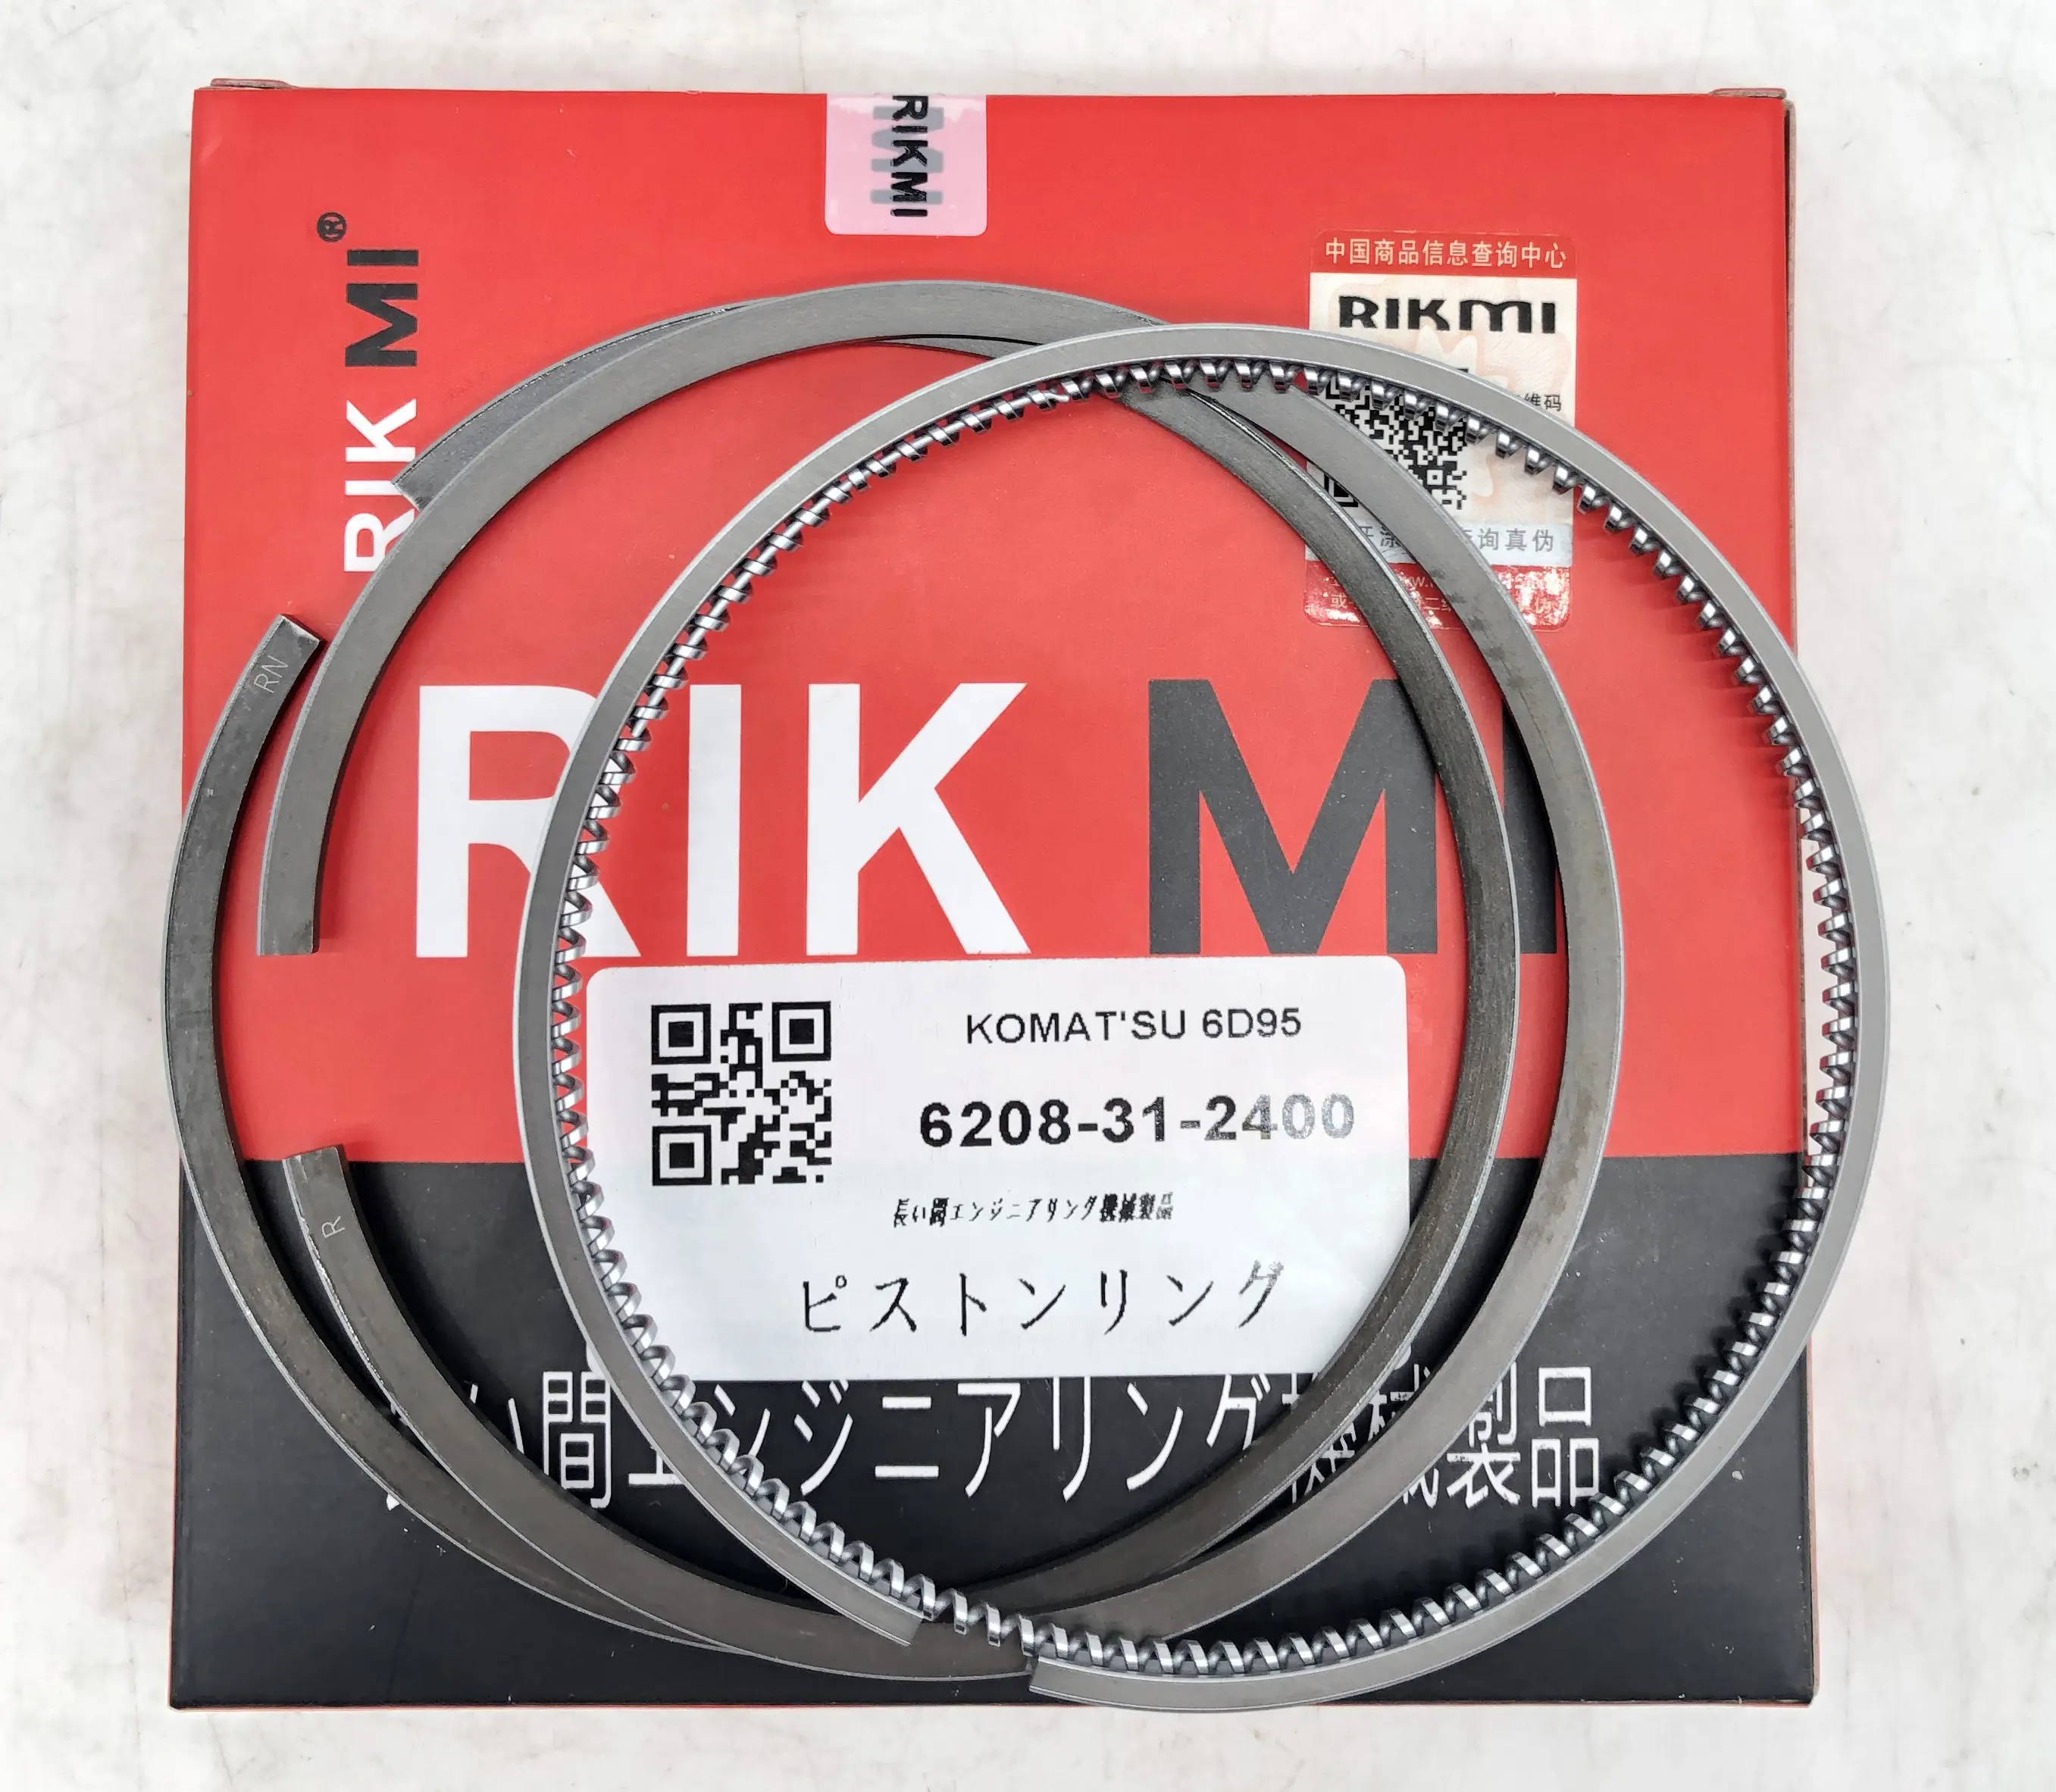 Rikmi גבוהה באיכות בוכנה טבעת עבור Komatsu 6D95 4D95 דיזל מנוע 6208-31-2400 6209-31-2400